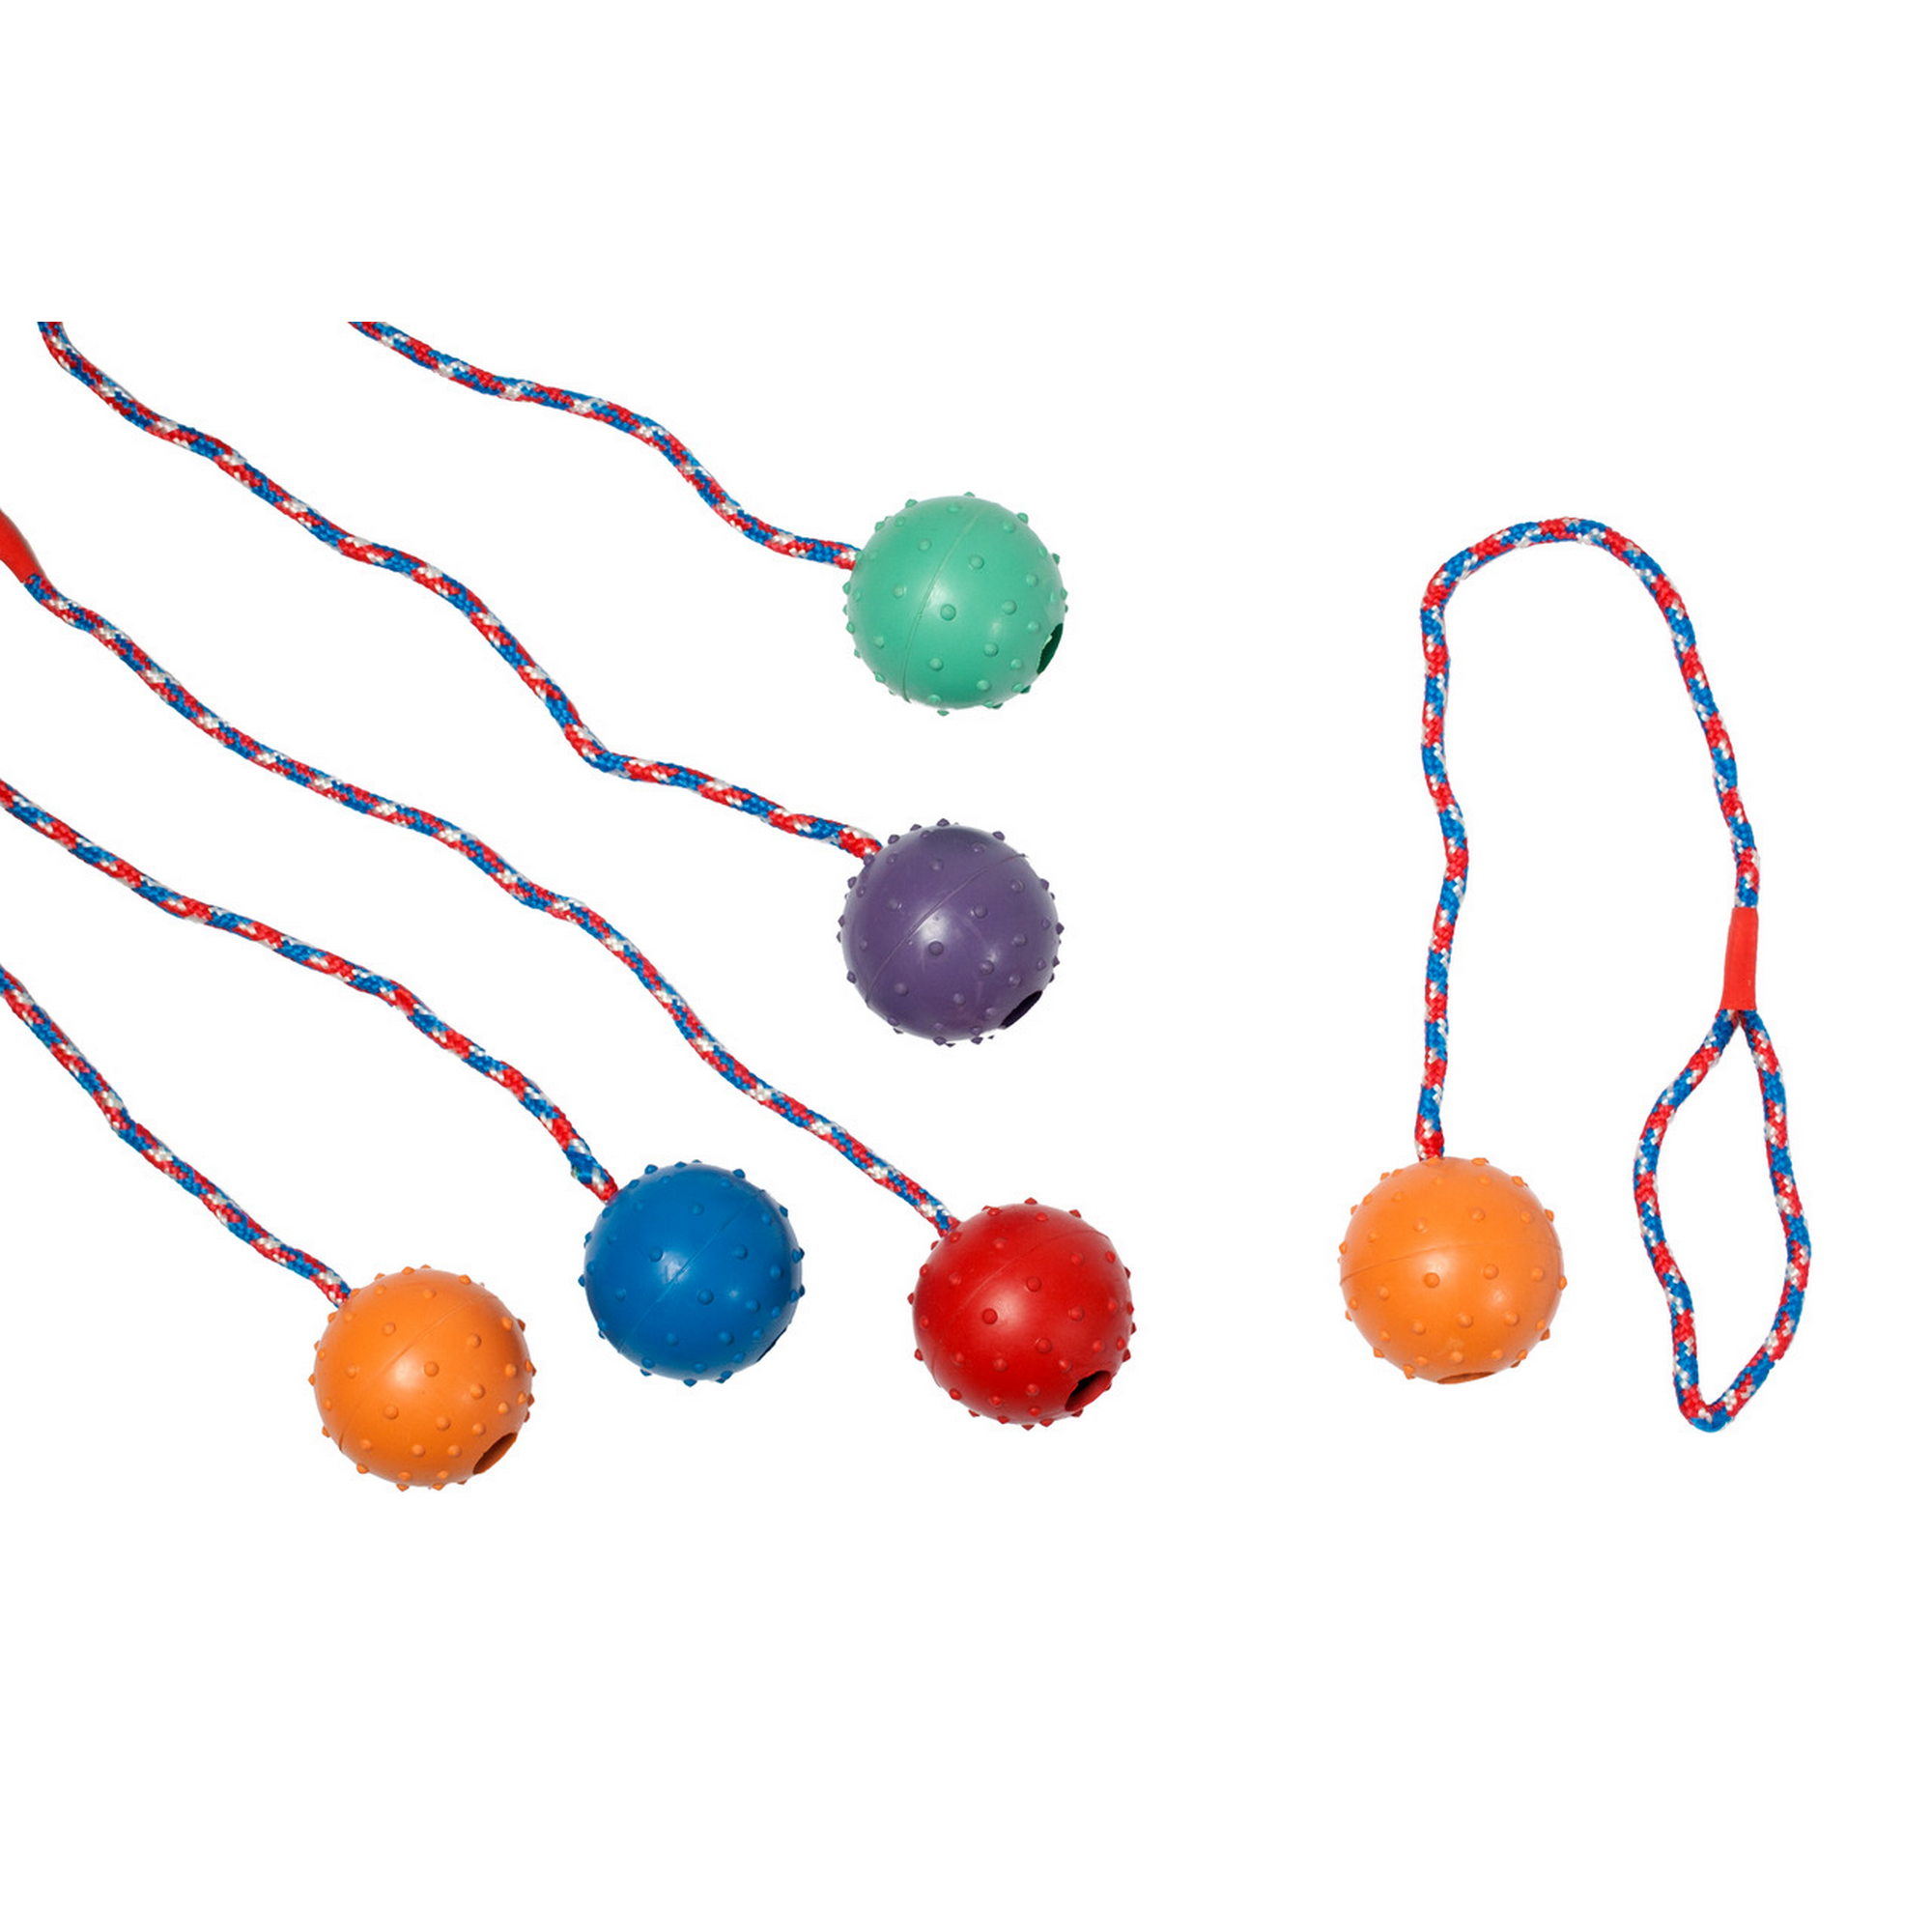 Gummispielzeug Ball 7 cm mit Seil sortiert + product picture